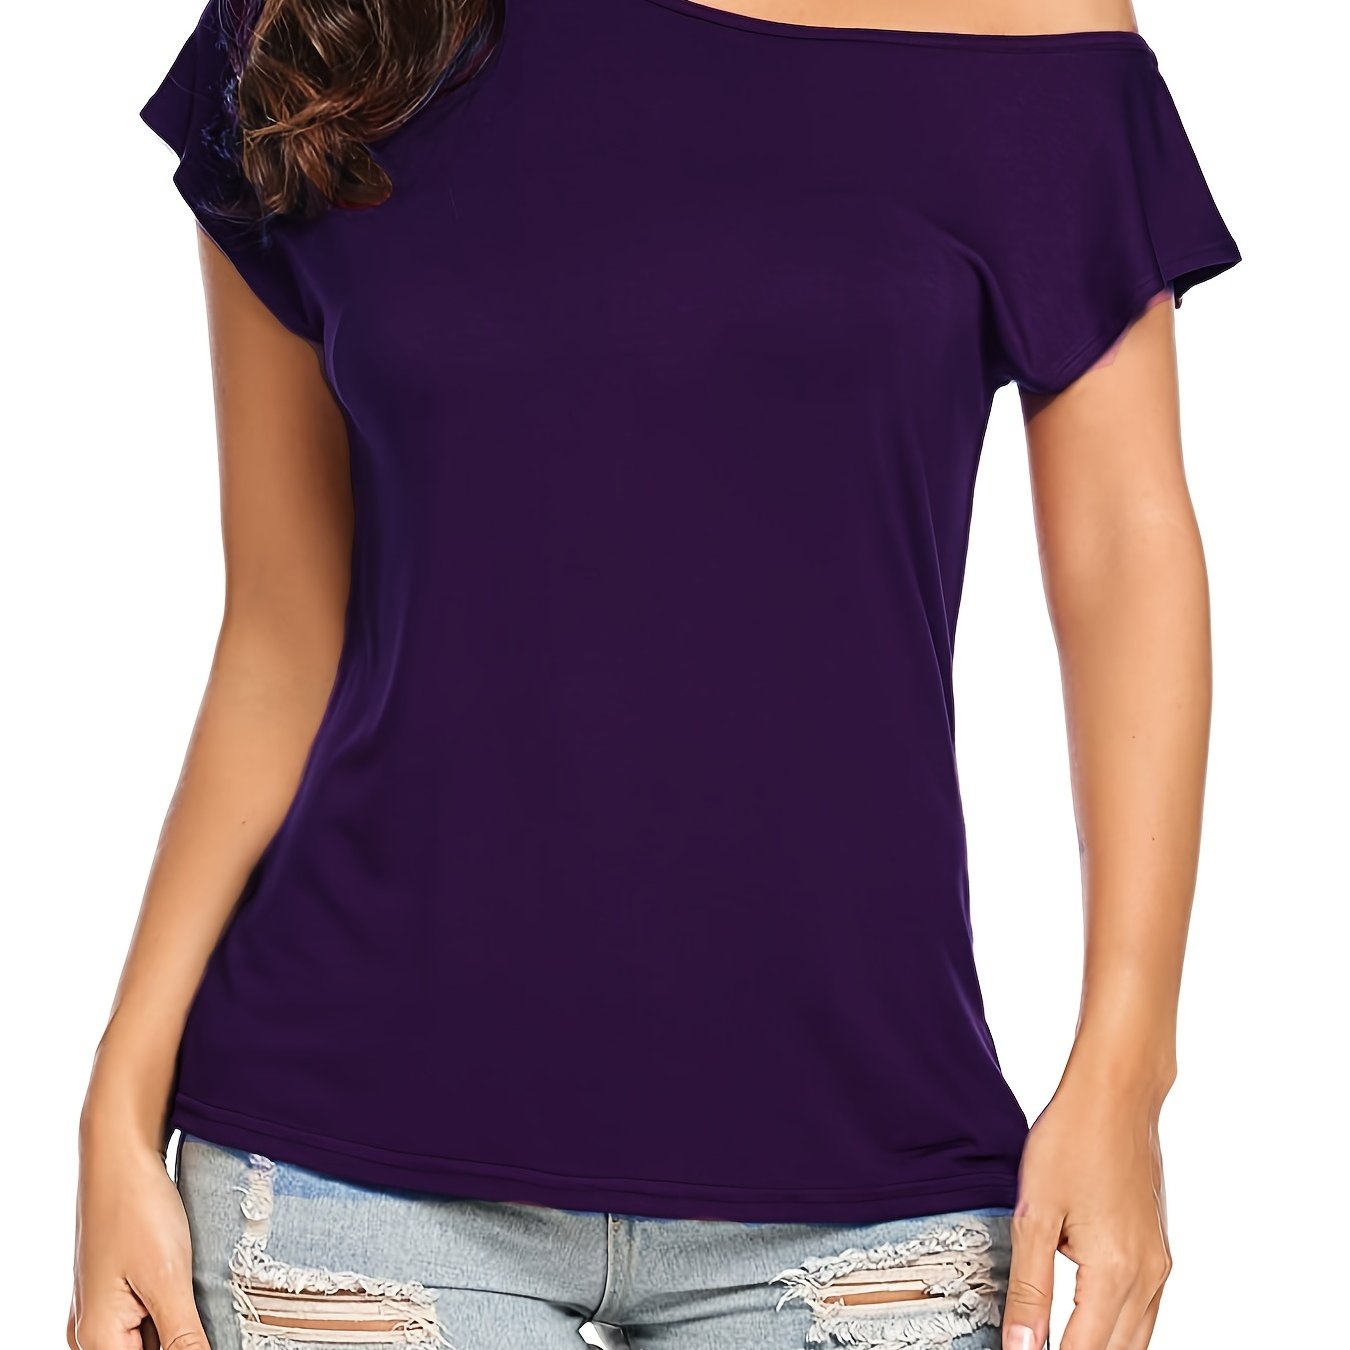 vlovelaw  Solid Slanted Shoulder Short Sleeve T-shirt, Asymmetrical Casual Loose Summer T-shirt, Women's Clothing